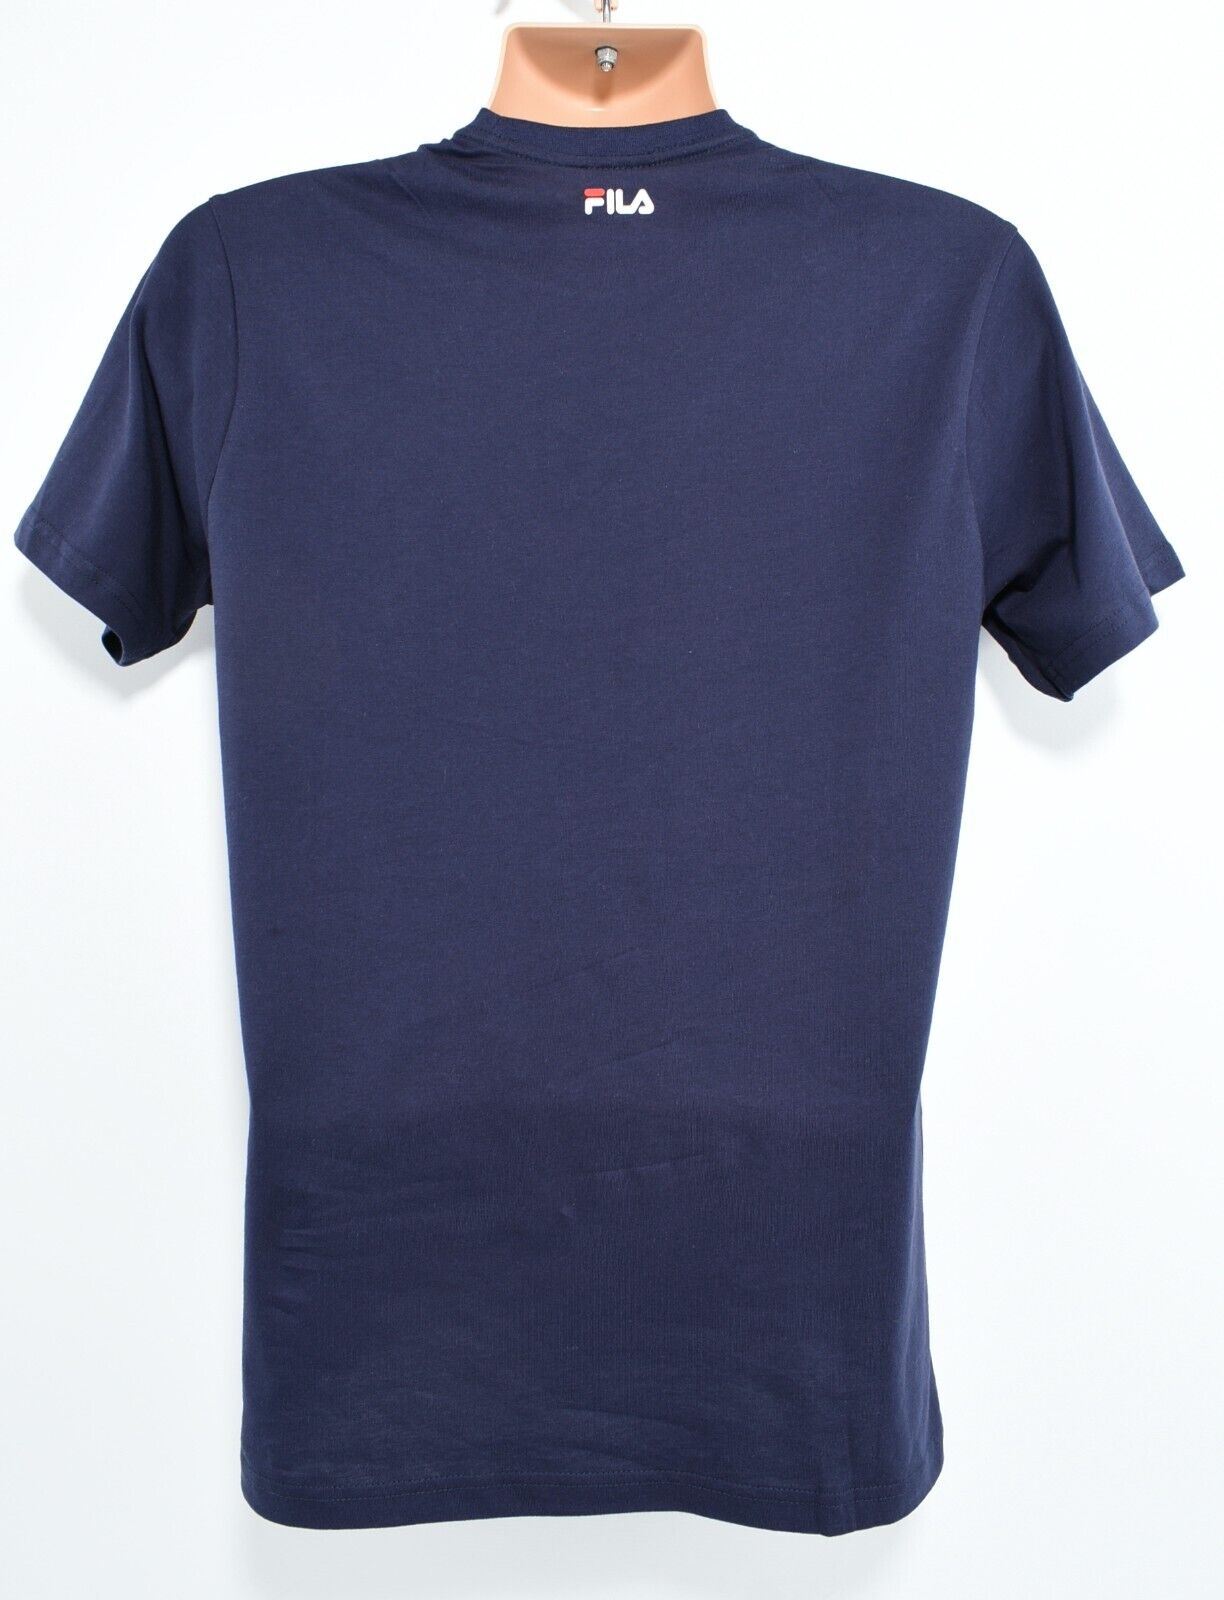 FILA Mens Crew Neck Short Sleeve Logo T-shirt, Navy Blue, size SMALL